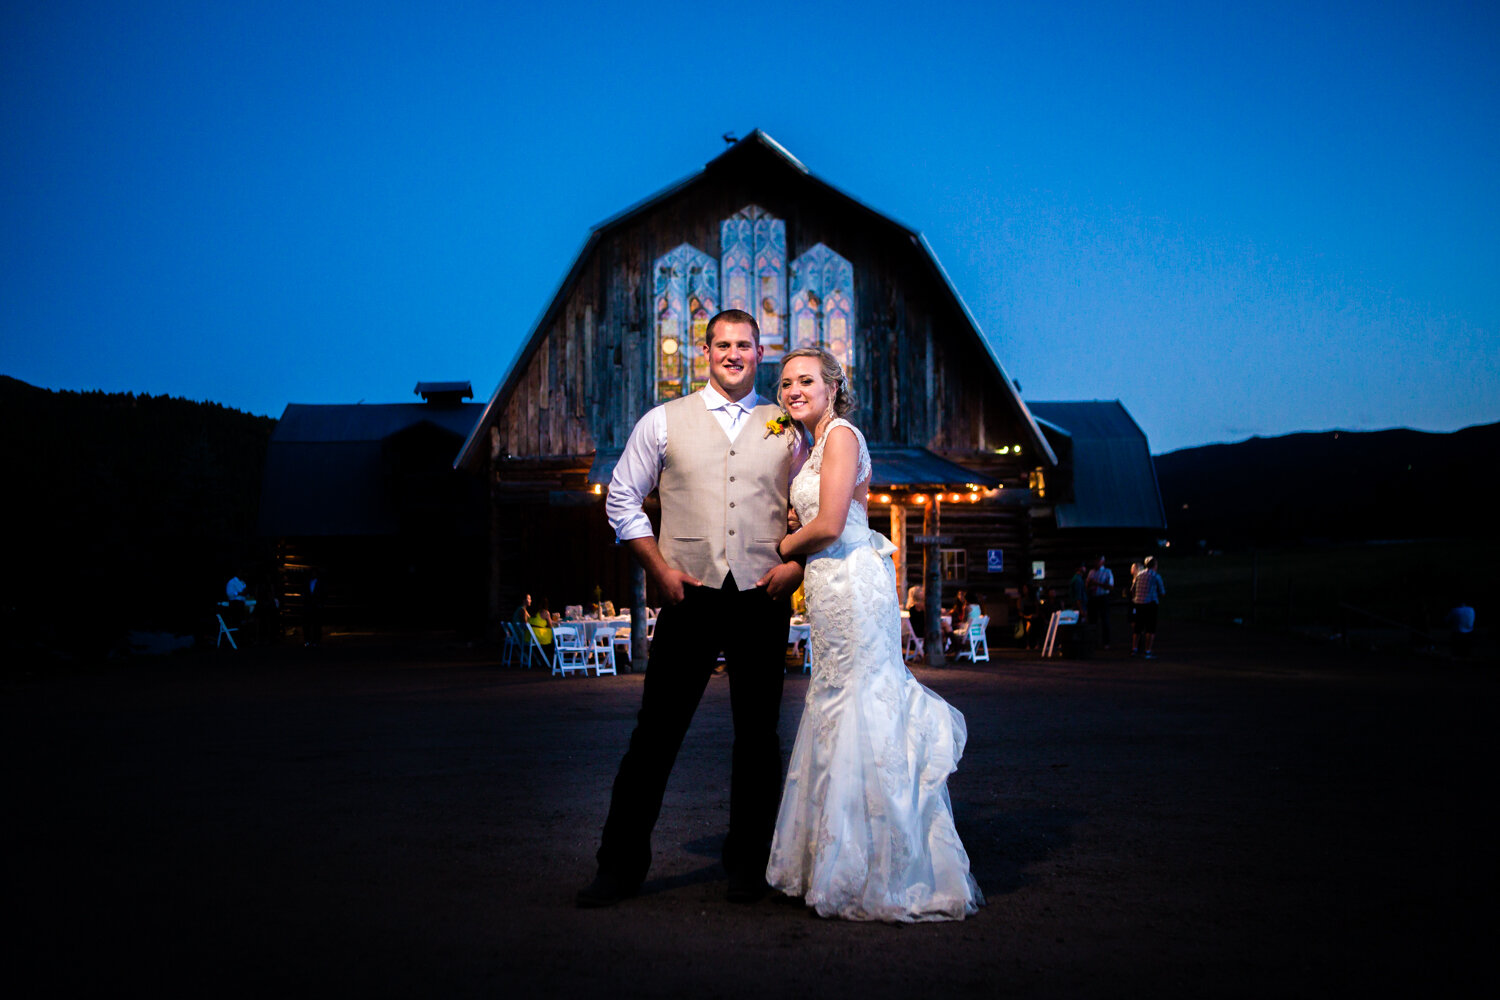  Wedding at The Barn at Evergreen Memorial. Photographed by JMGant Photography. 